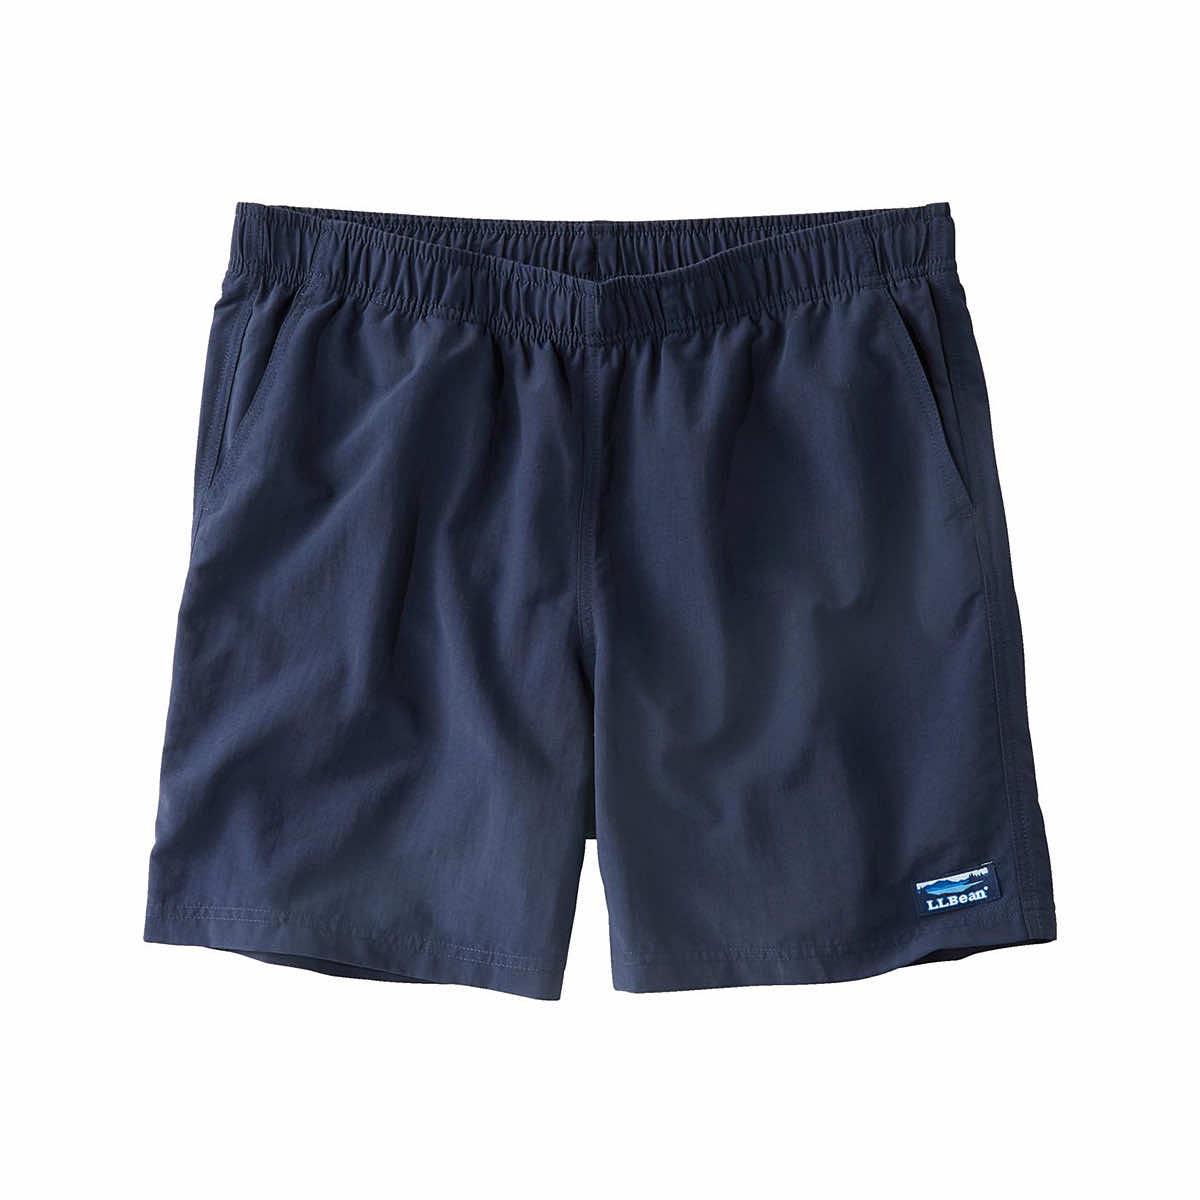 Men's Classic Supplex Sport Shorts - 6 Inches